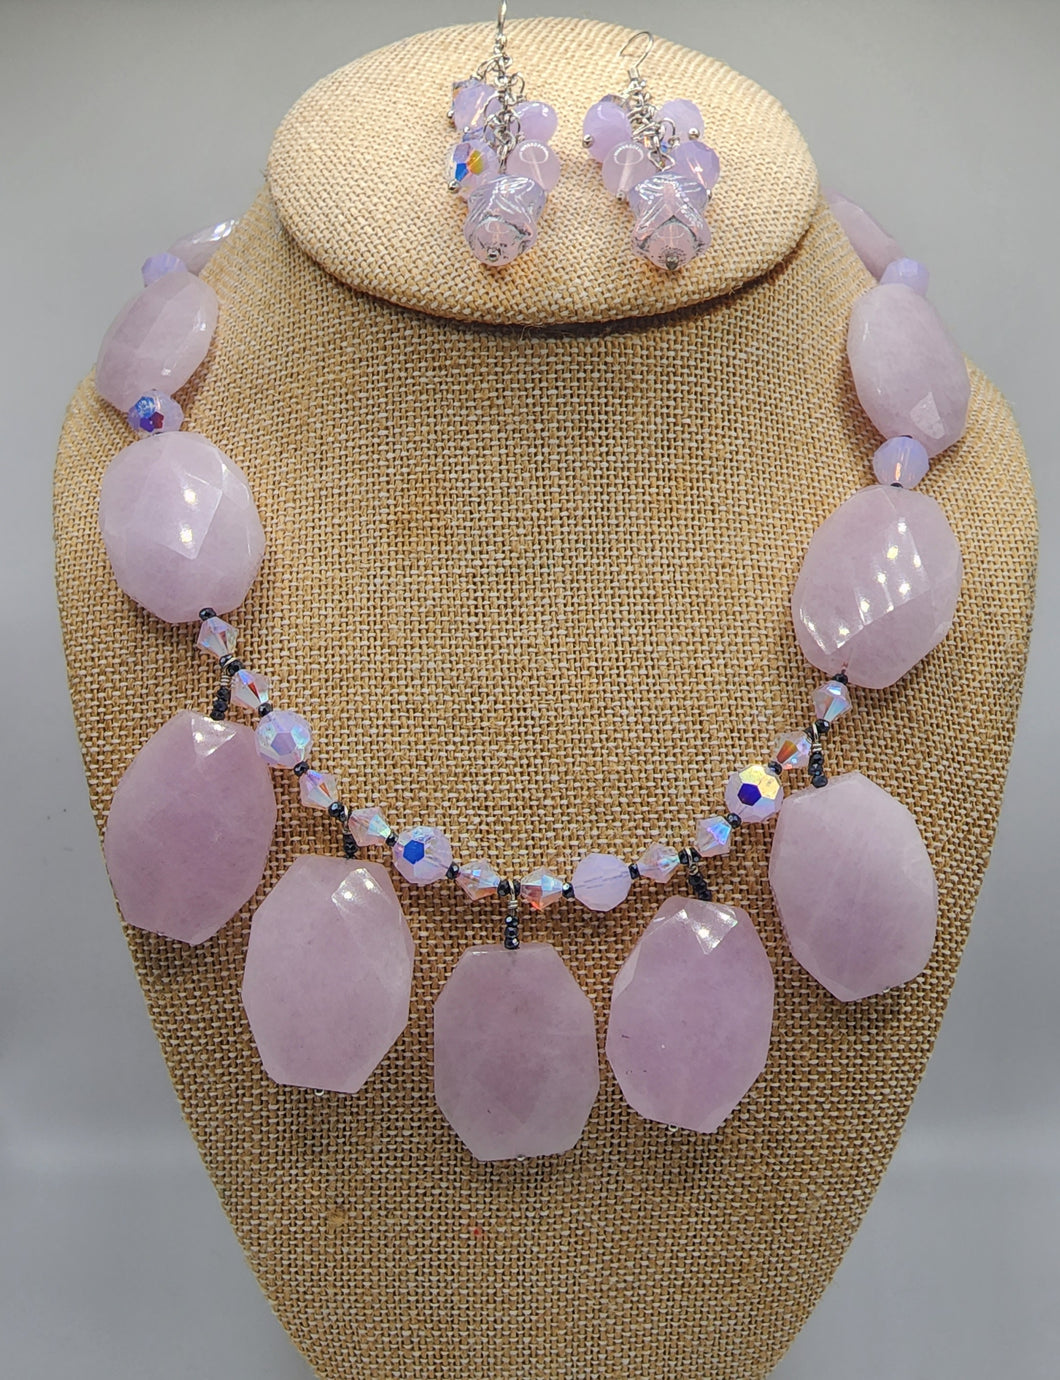 Lavender Jade Gemstone and Swarovski Crystal Necklace and Earrings Set - Trimmed in Sterling Silver